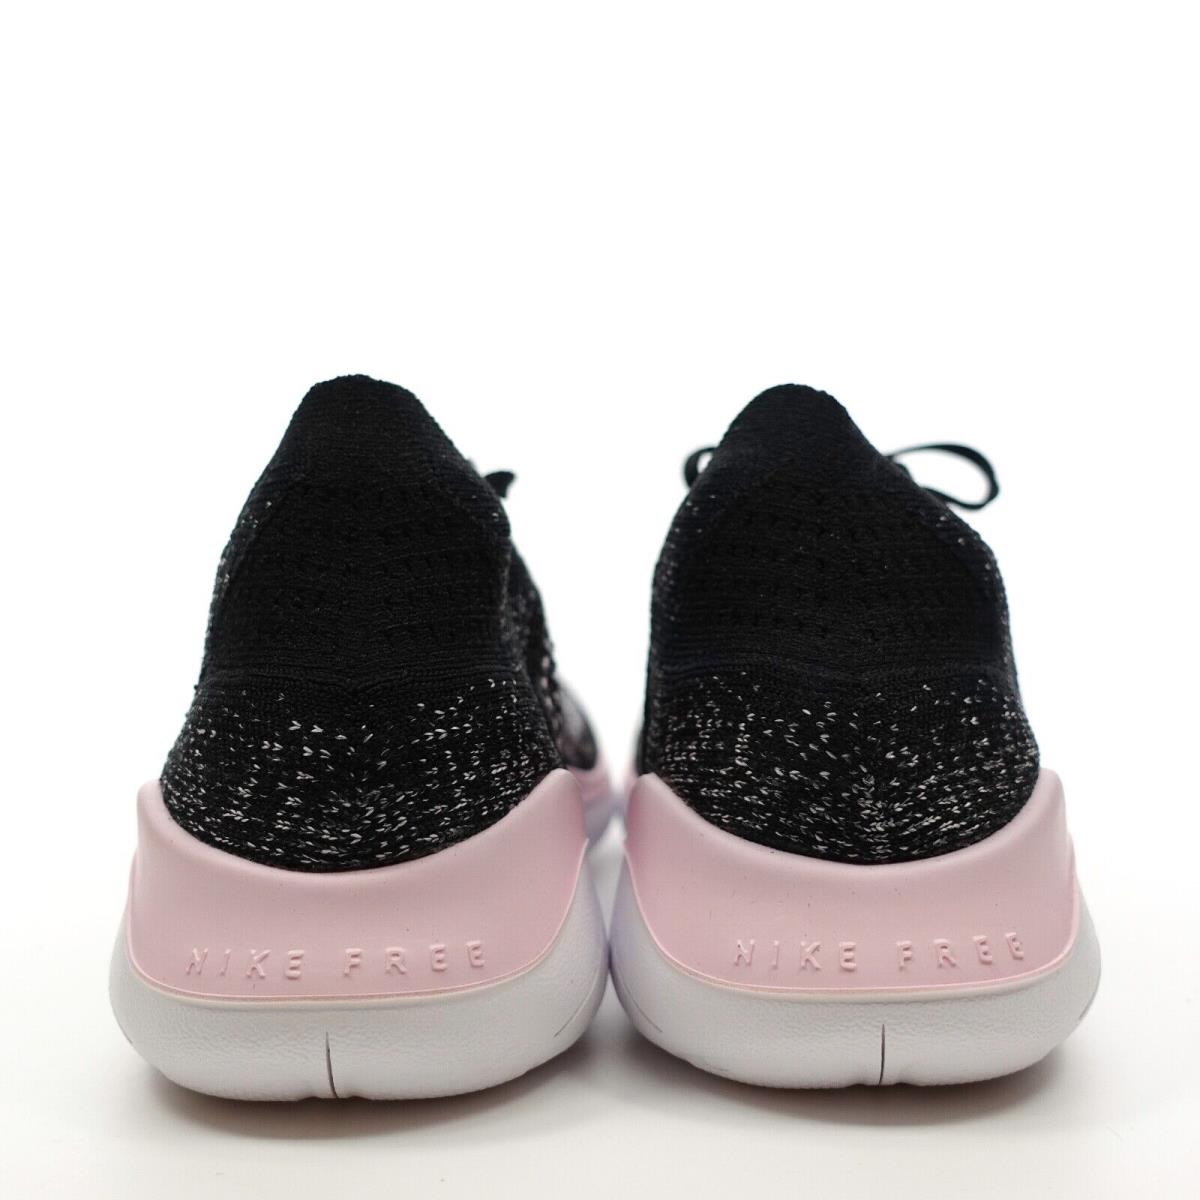 Nike shoes  - Pink, Black 6